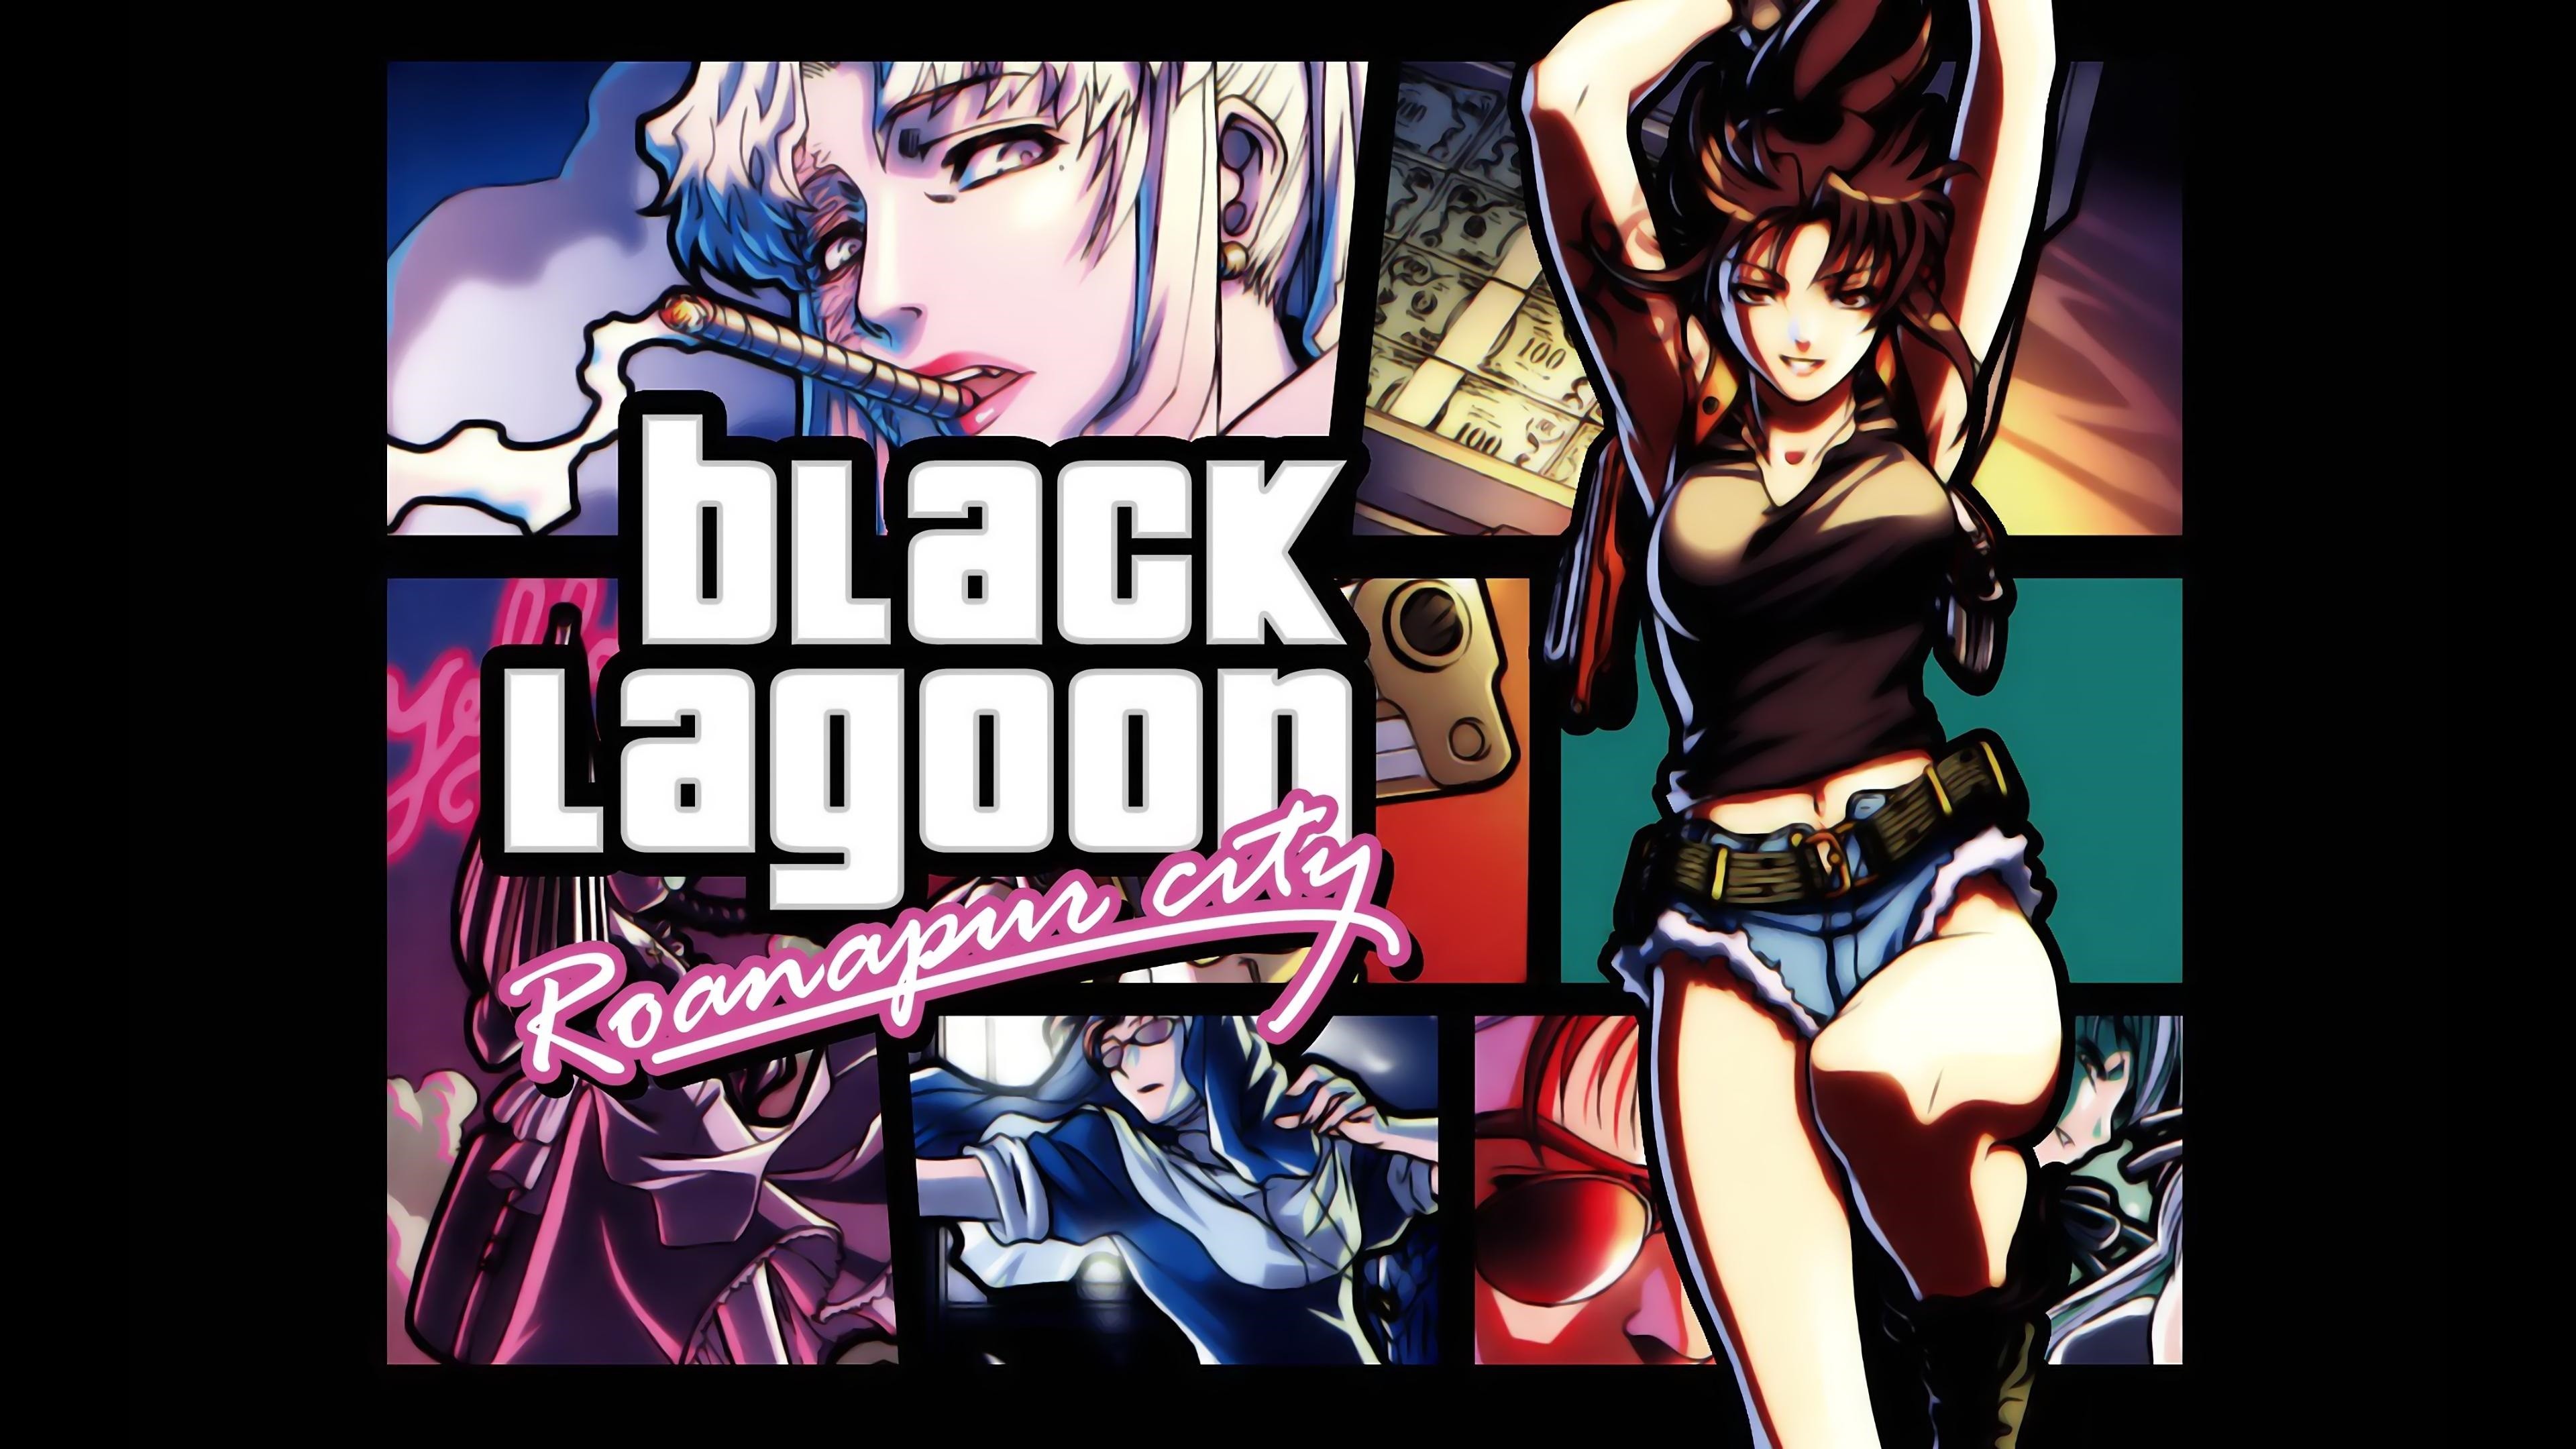 Anime 3840x2160 Black Lagoon Revy gun frontal view anime anime girls jean shorts brunette arms up smoking